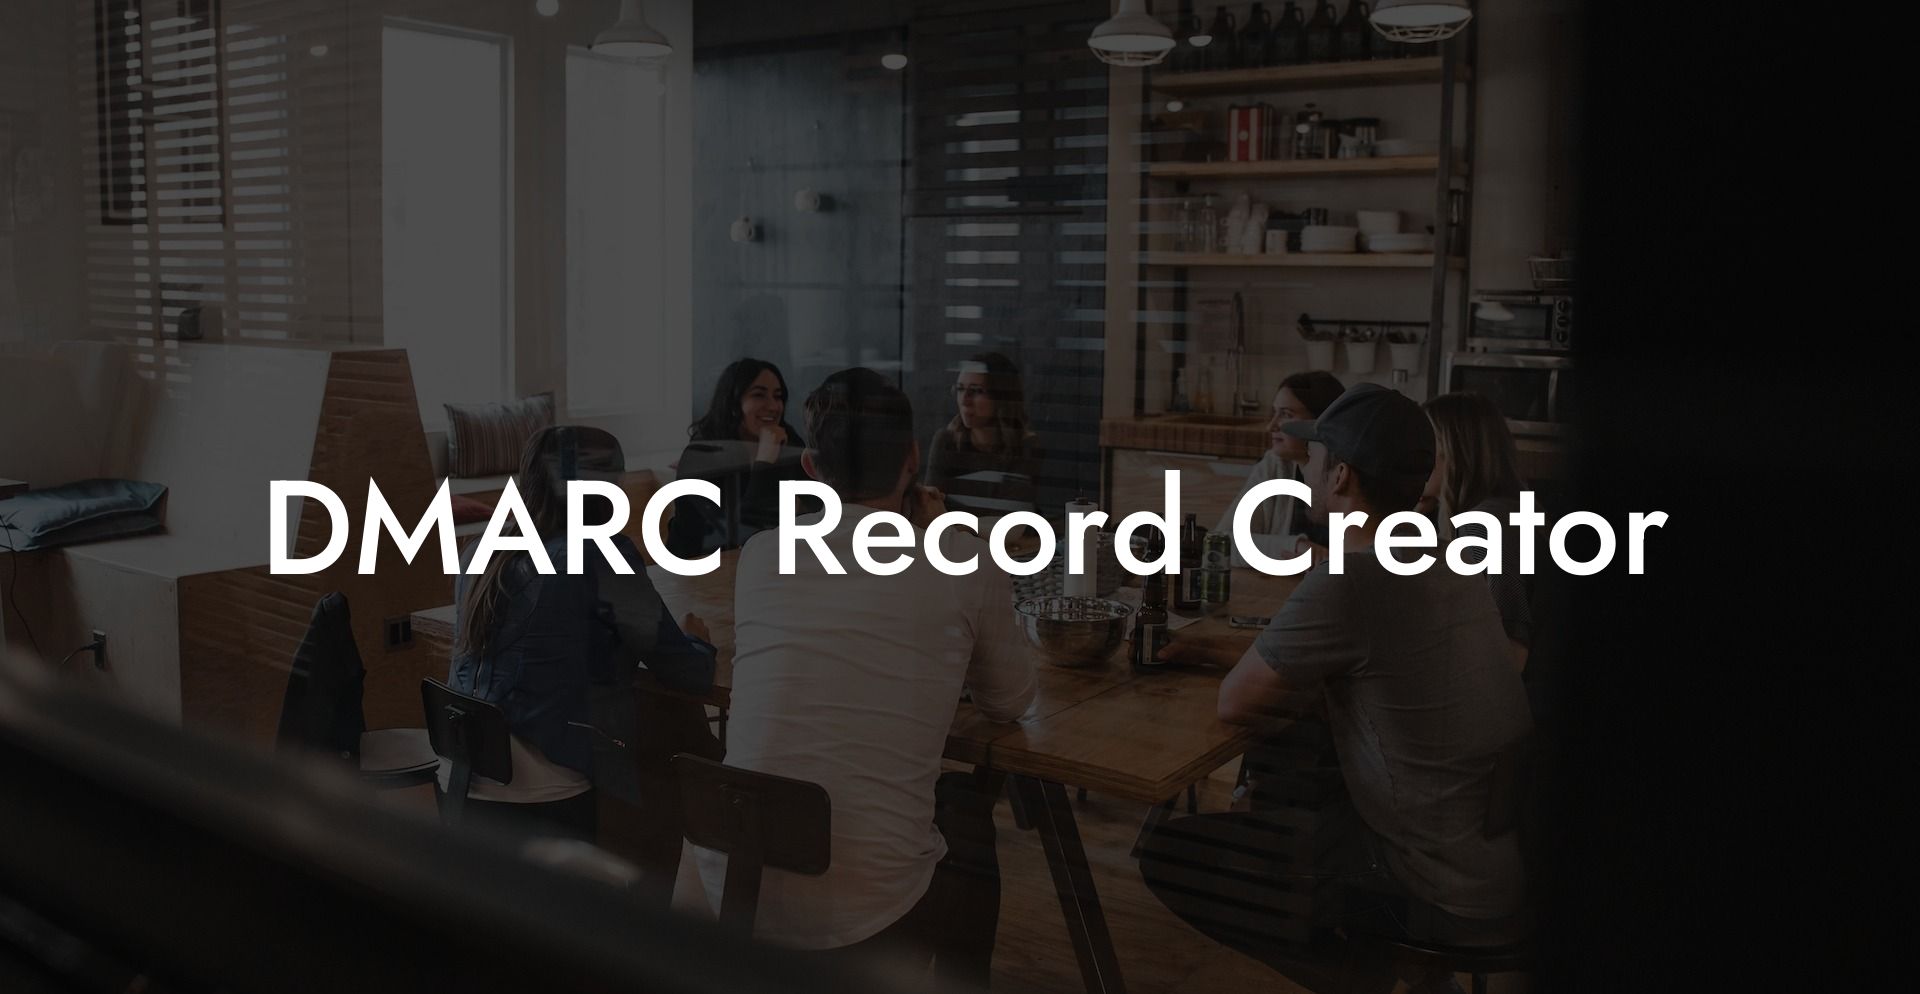 DMARC Record Creator